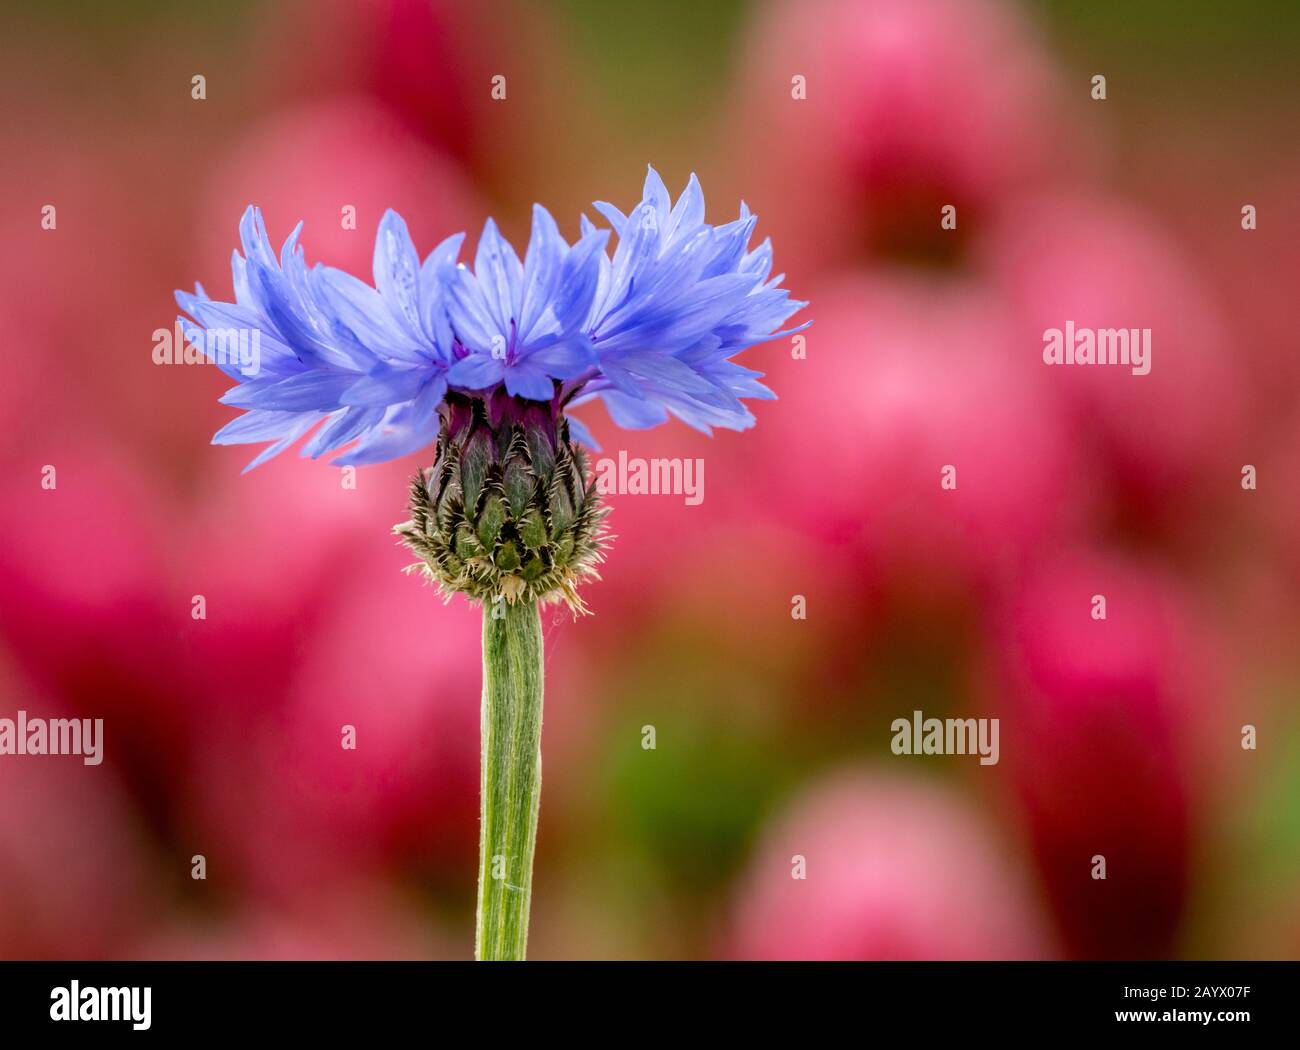 single blue cornflower or bachelor's button (centaurea cyanus) flower on purple background, detail Stock Photo